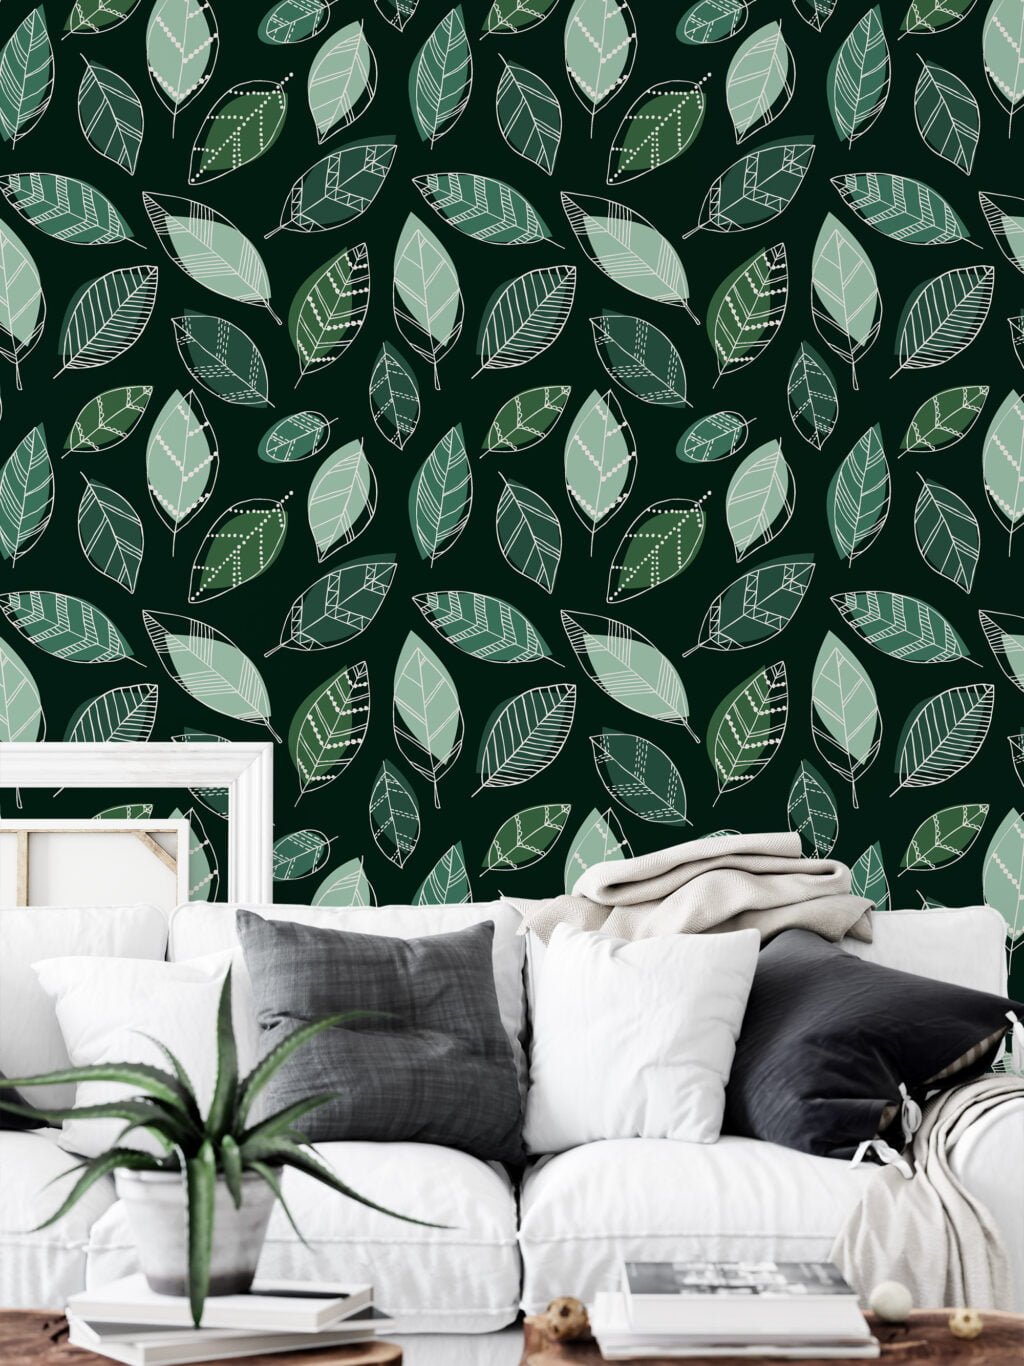 Dark Green Leaves With White Outlines Illustration Wallpaper, Serene Green Leaf Design Peel & Stick Wall Mural